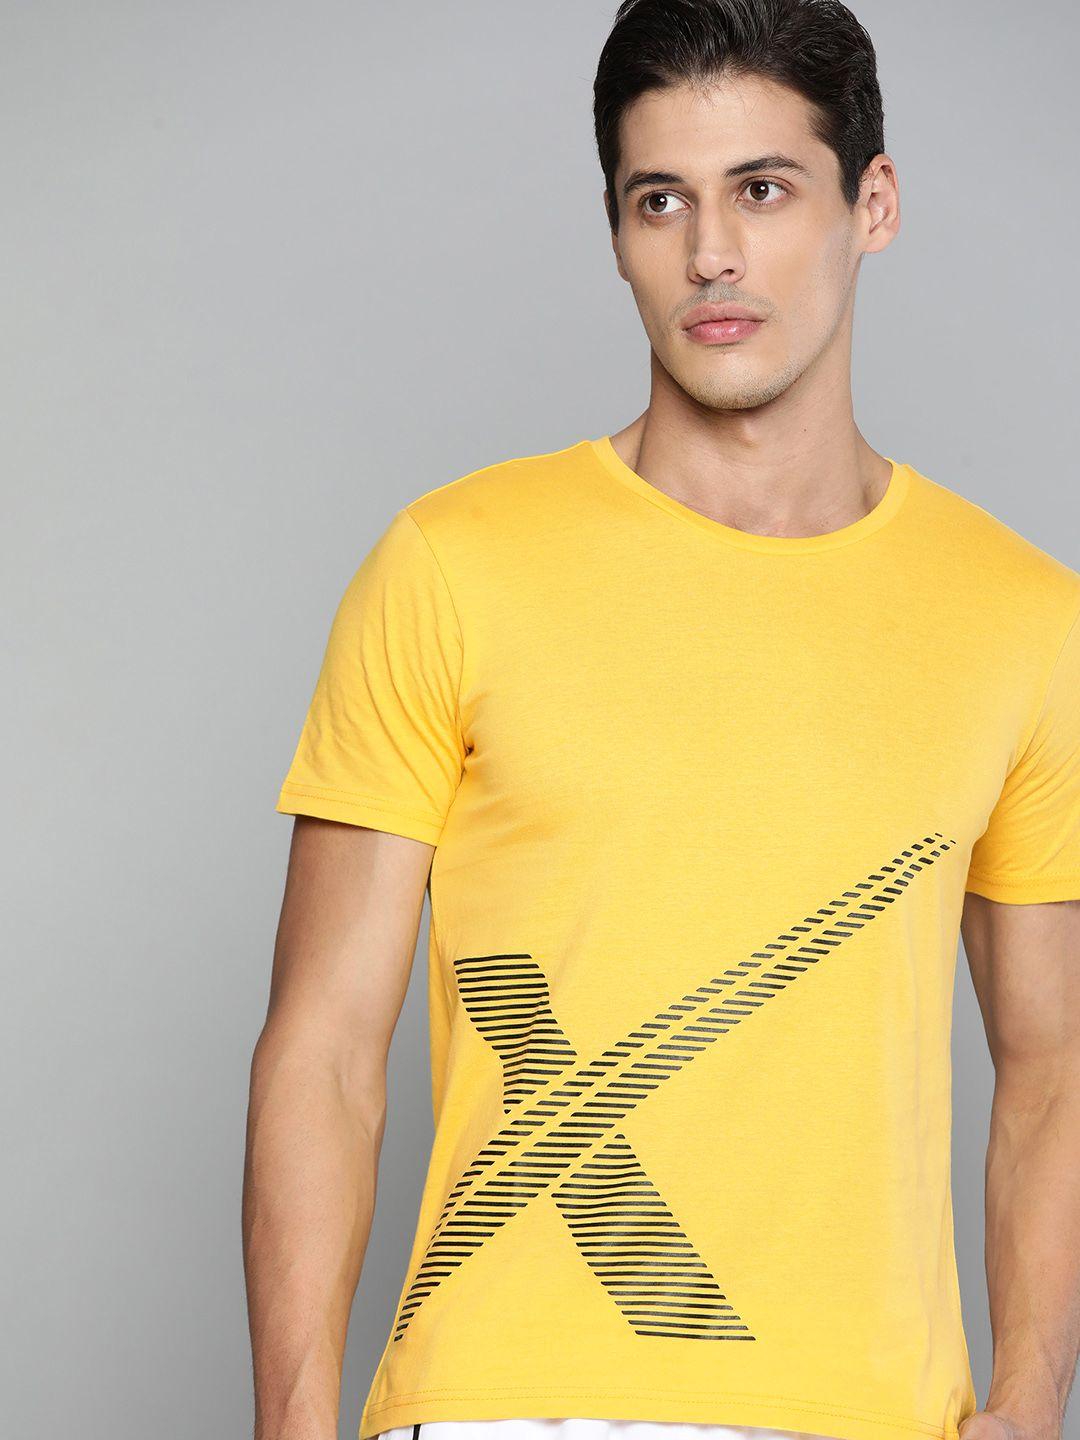 hrx by hrithik roshan lifestyle men mustard yellow bio-wash brand carrier tshirts